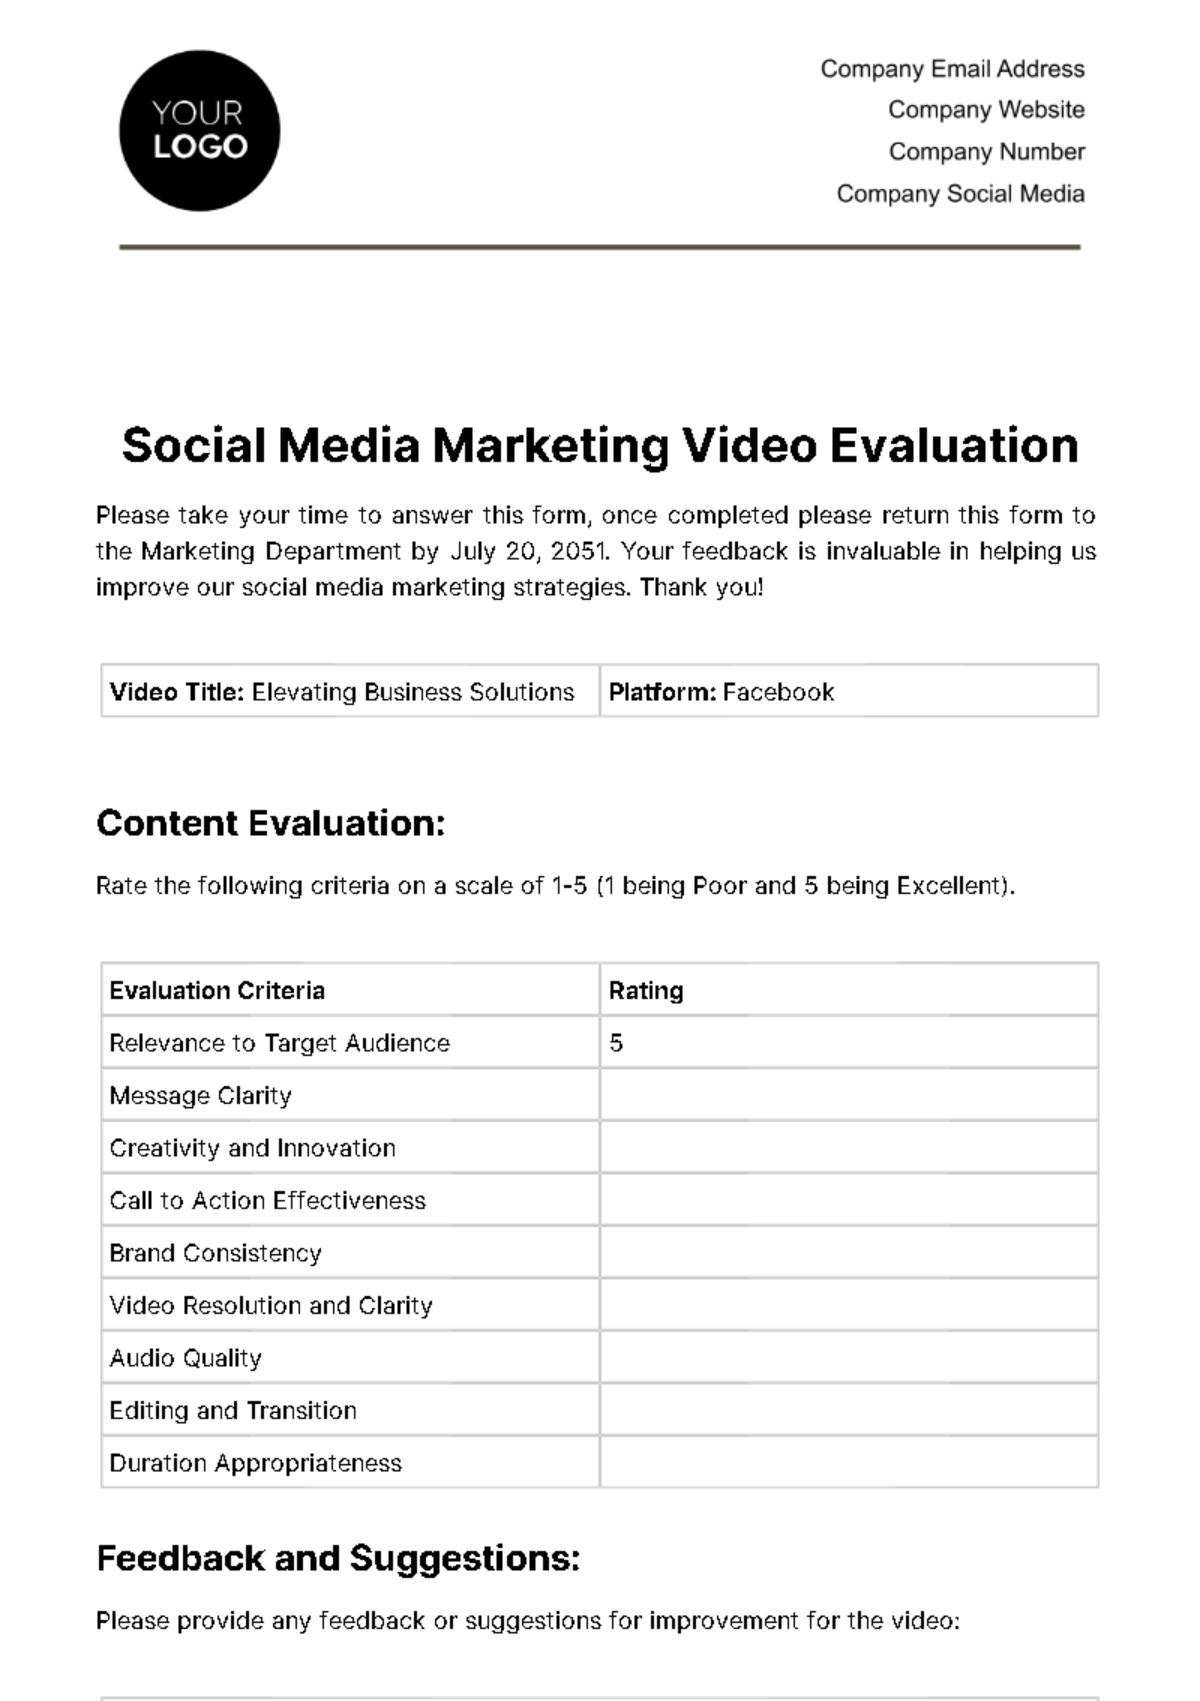 Social Media Marketing Video Evaluation Template